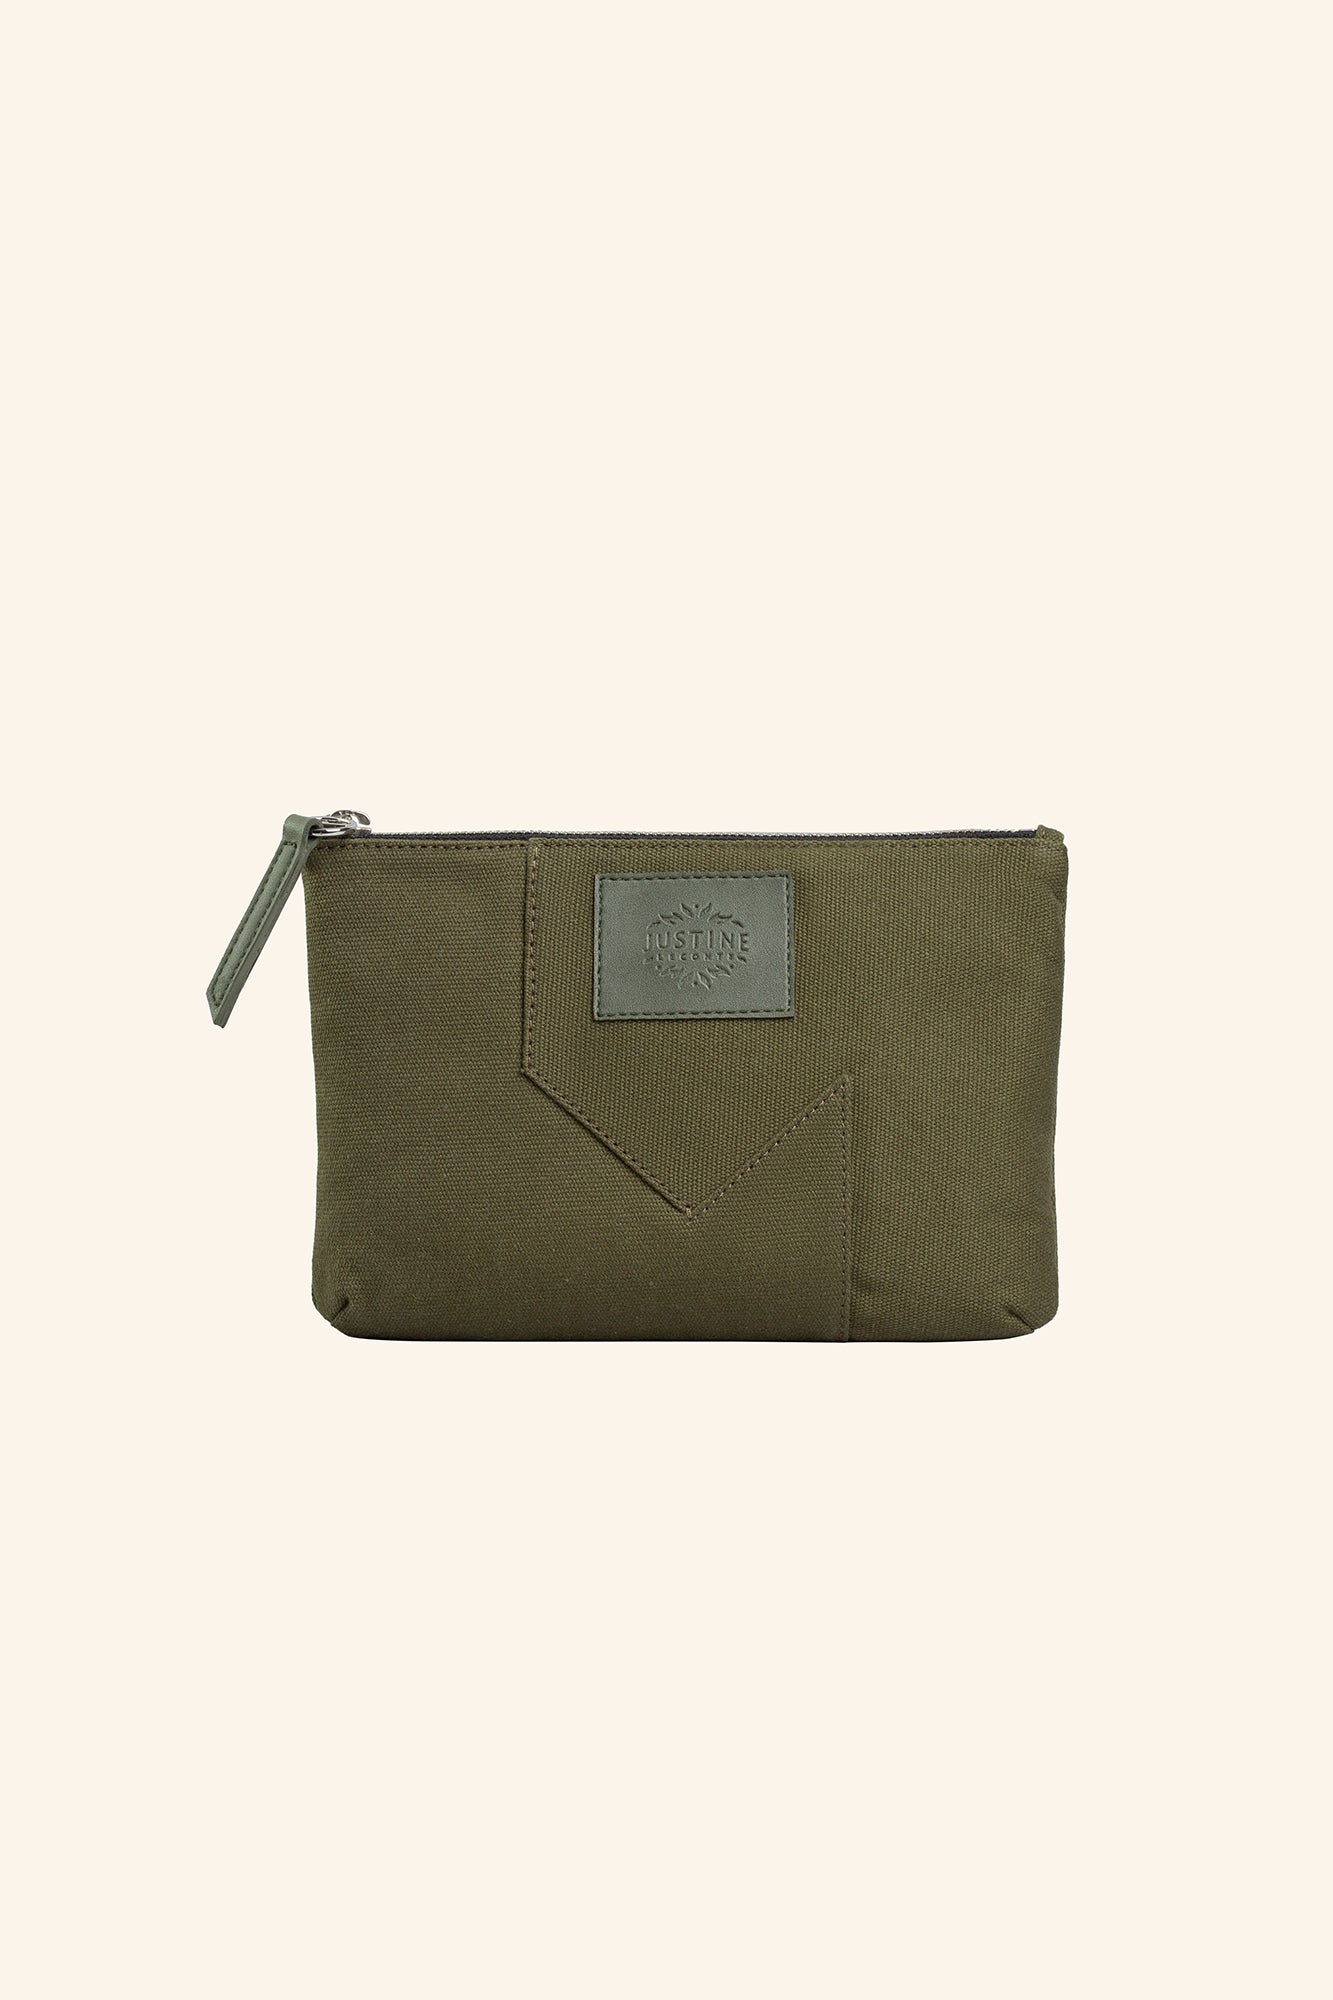 DIY 3-Pocket Wallet Leather Kit - Saturday Scratch